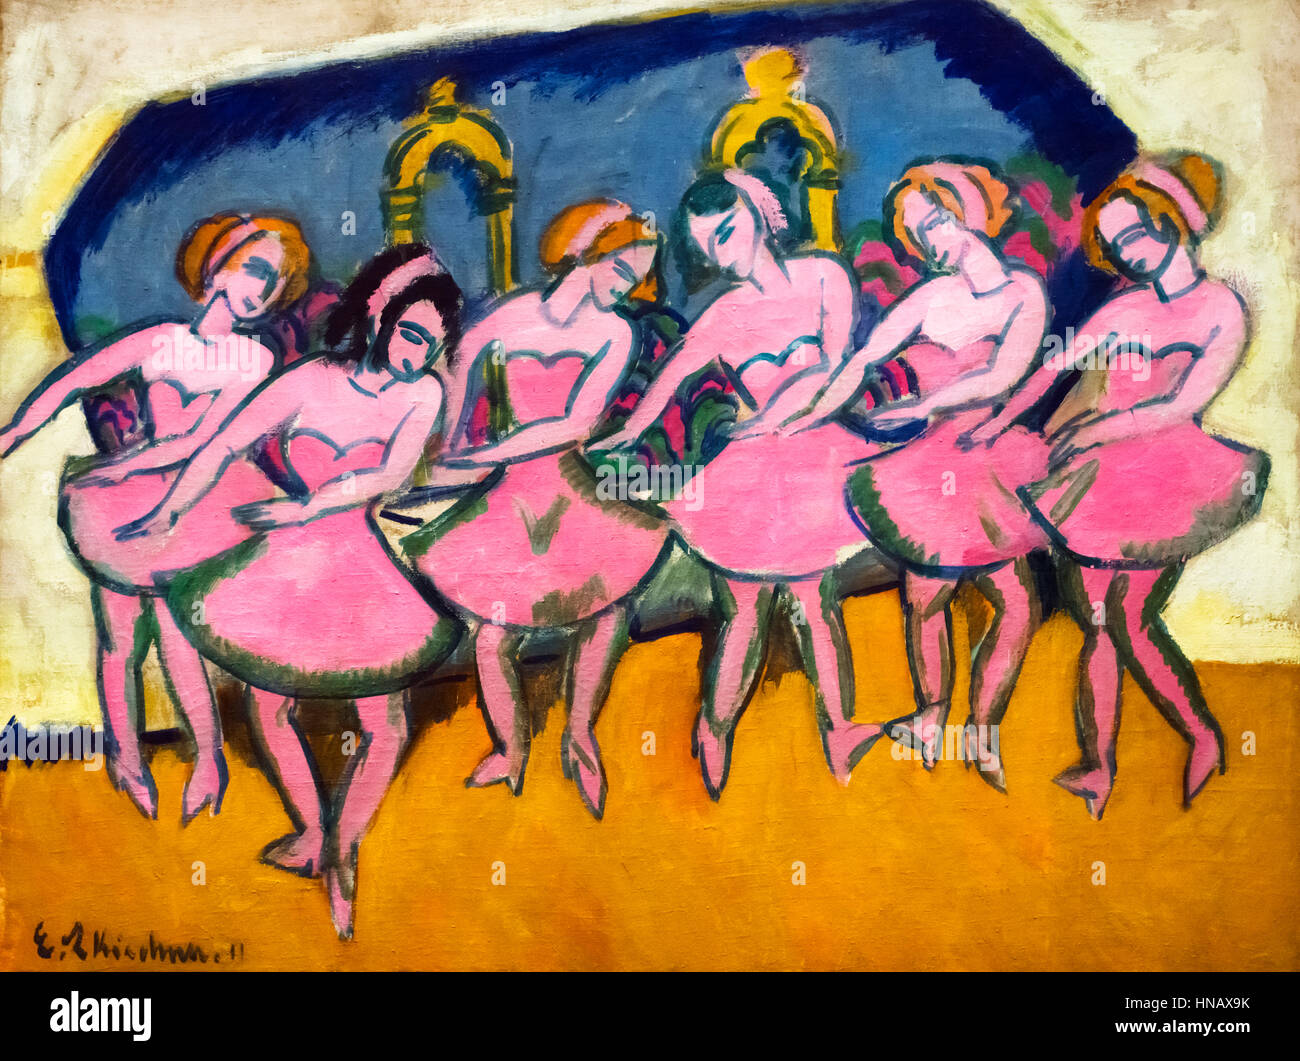 Kirchner, pittura espressionista. 'Six ballerini" da Ernst Ludwig Kirchner (1880-1938), olio su tela, 1911. Foto Stock